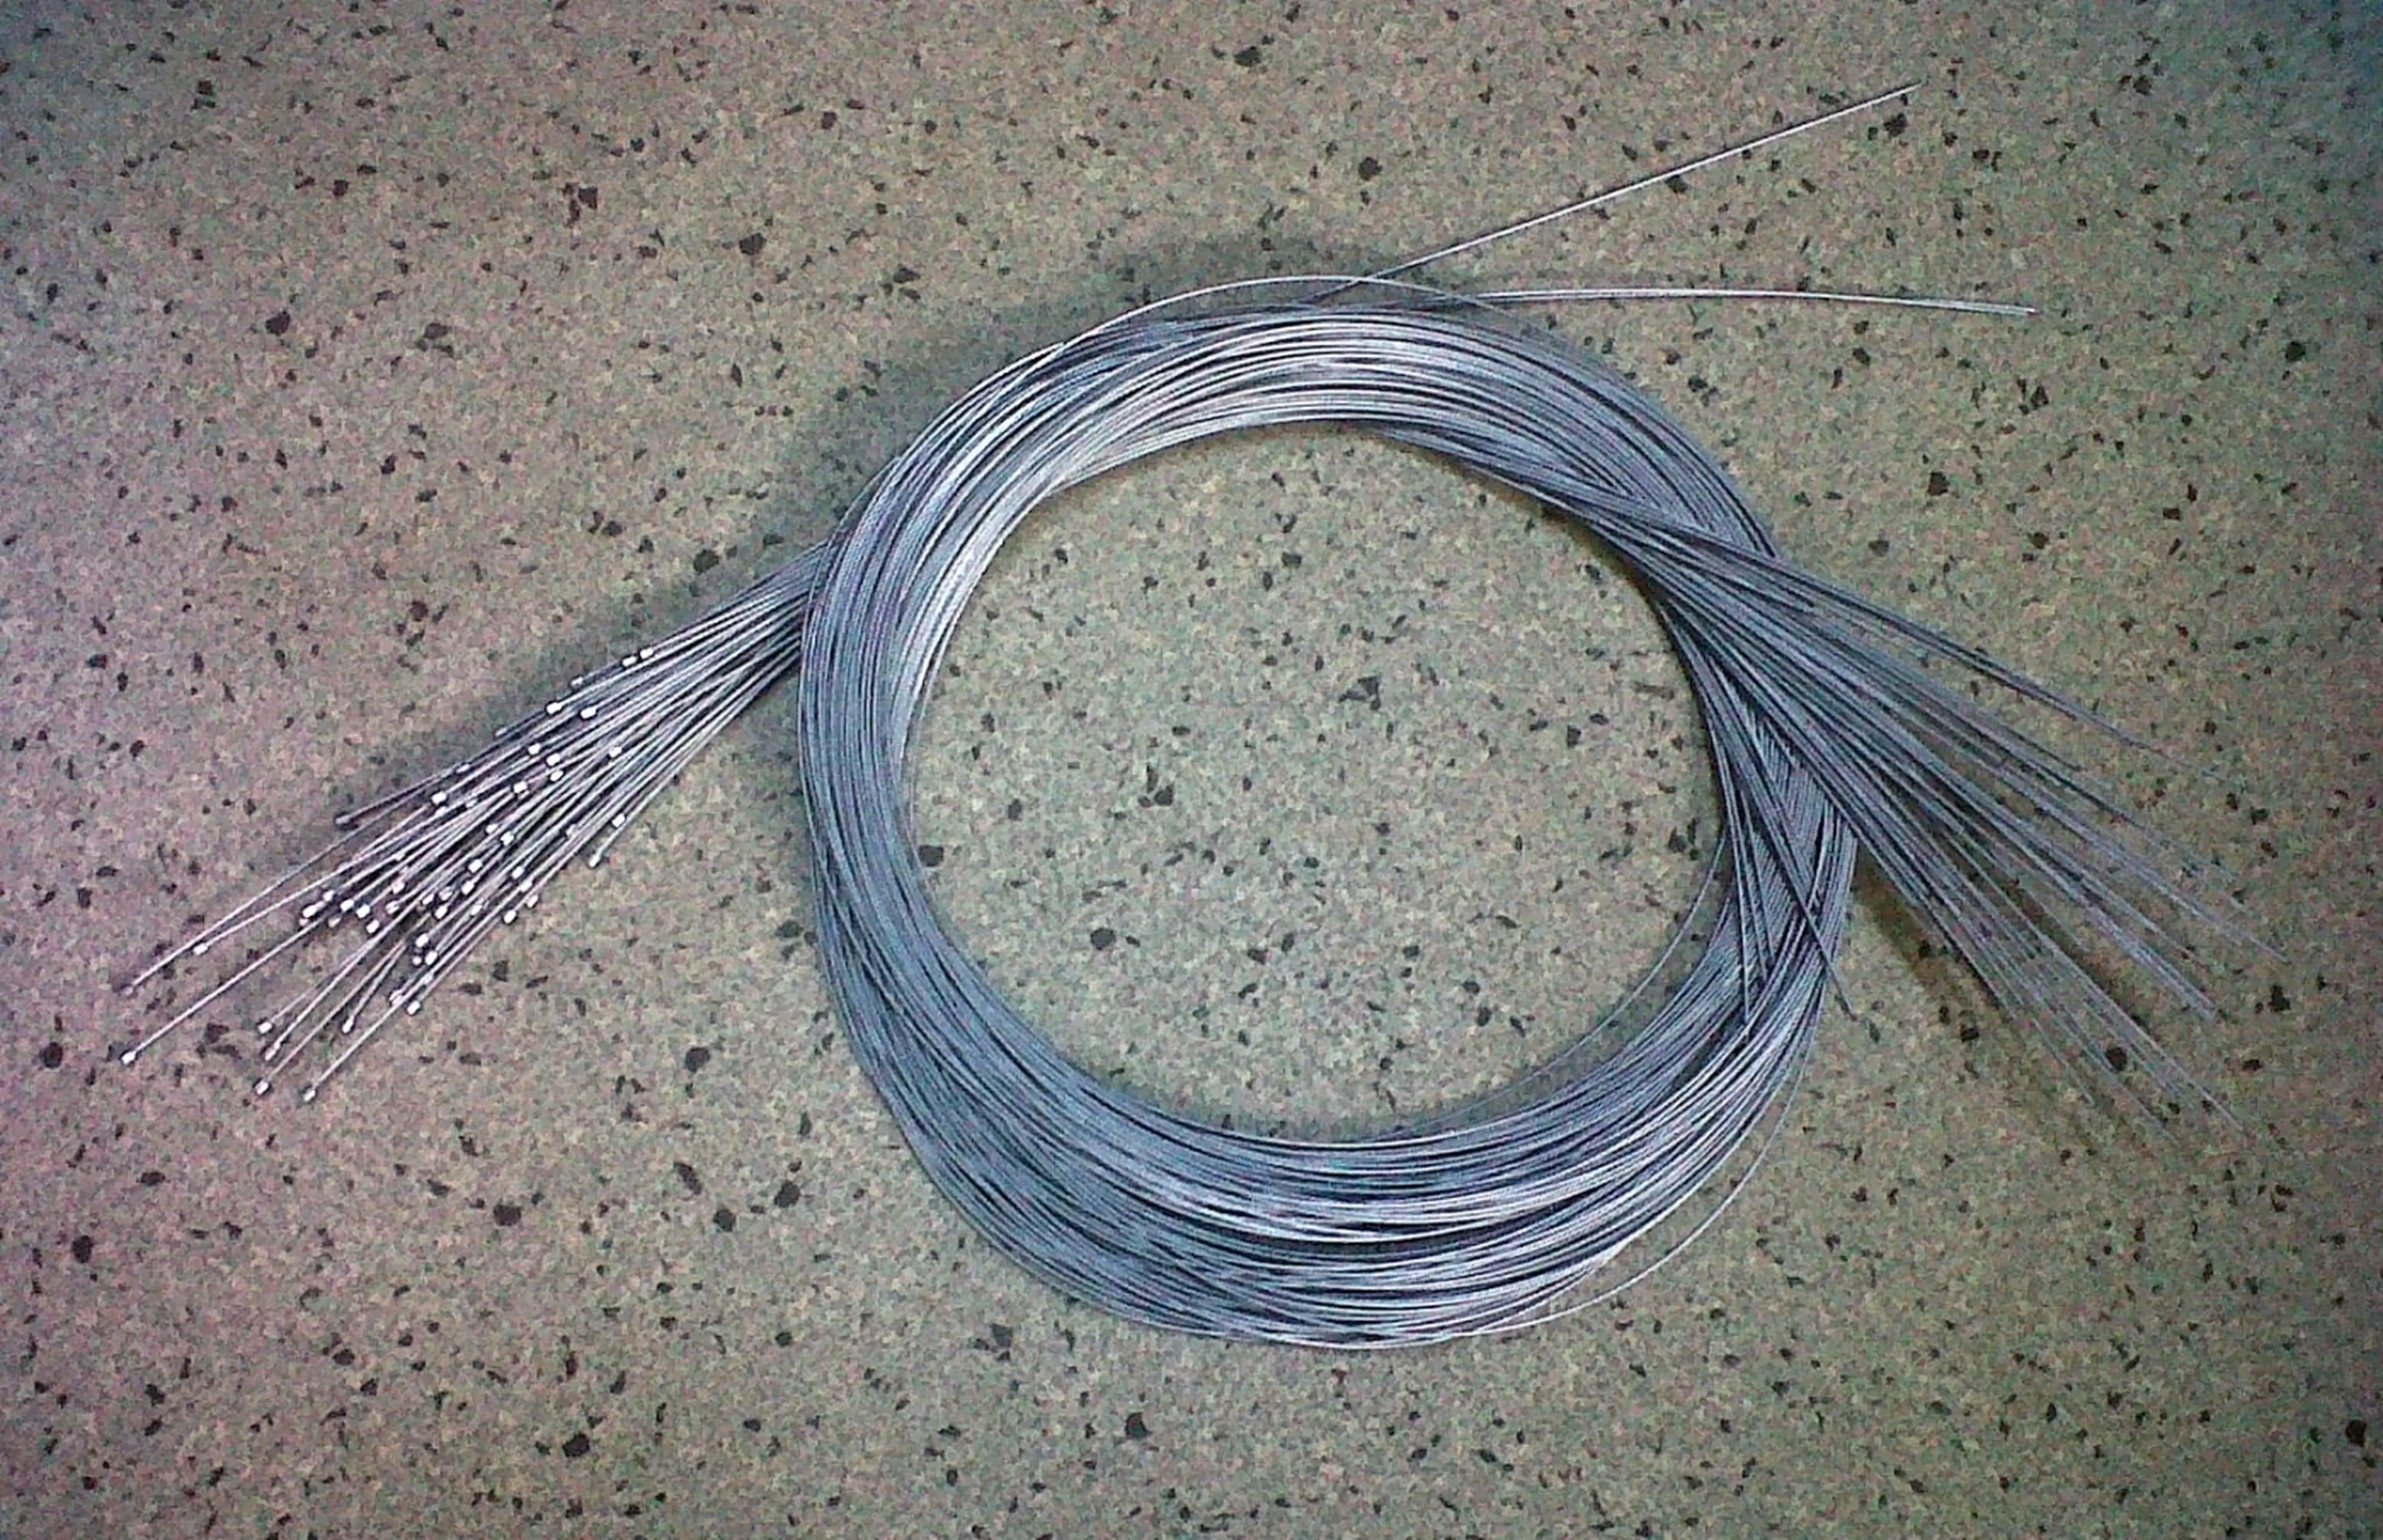 1. Shimano cablu schimbator